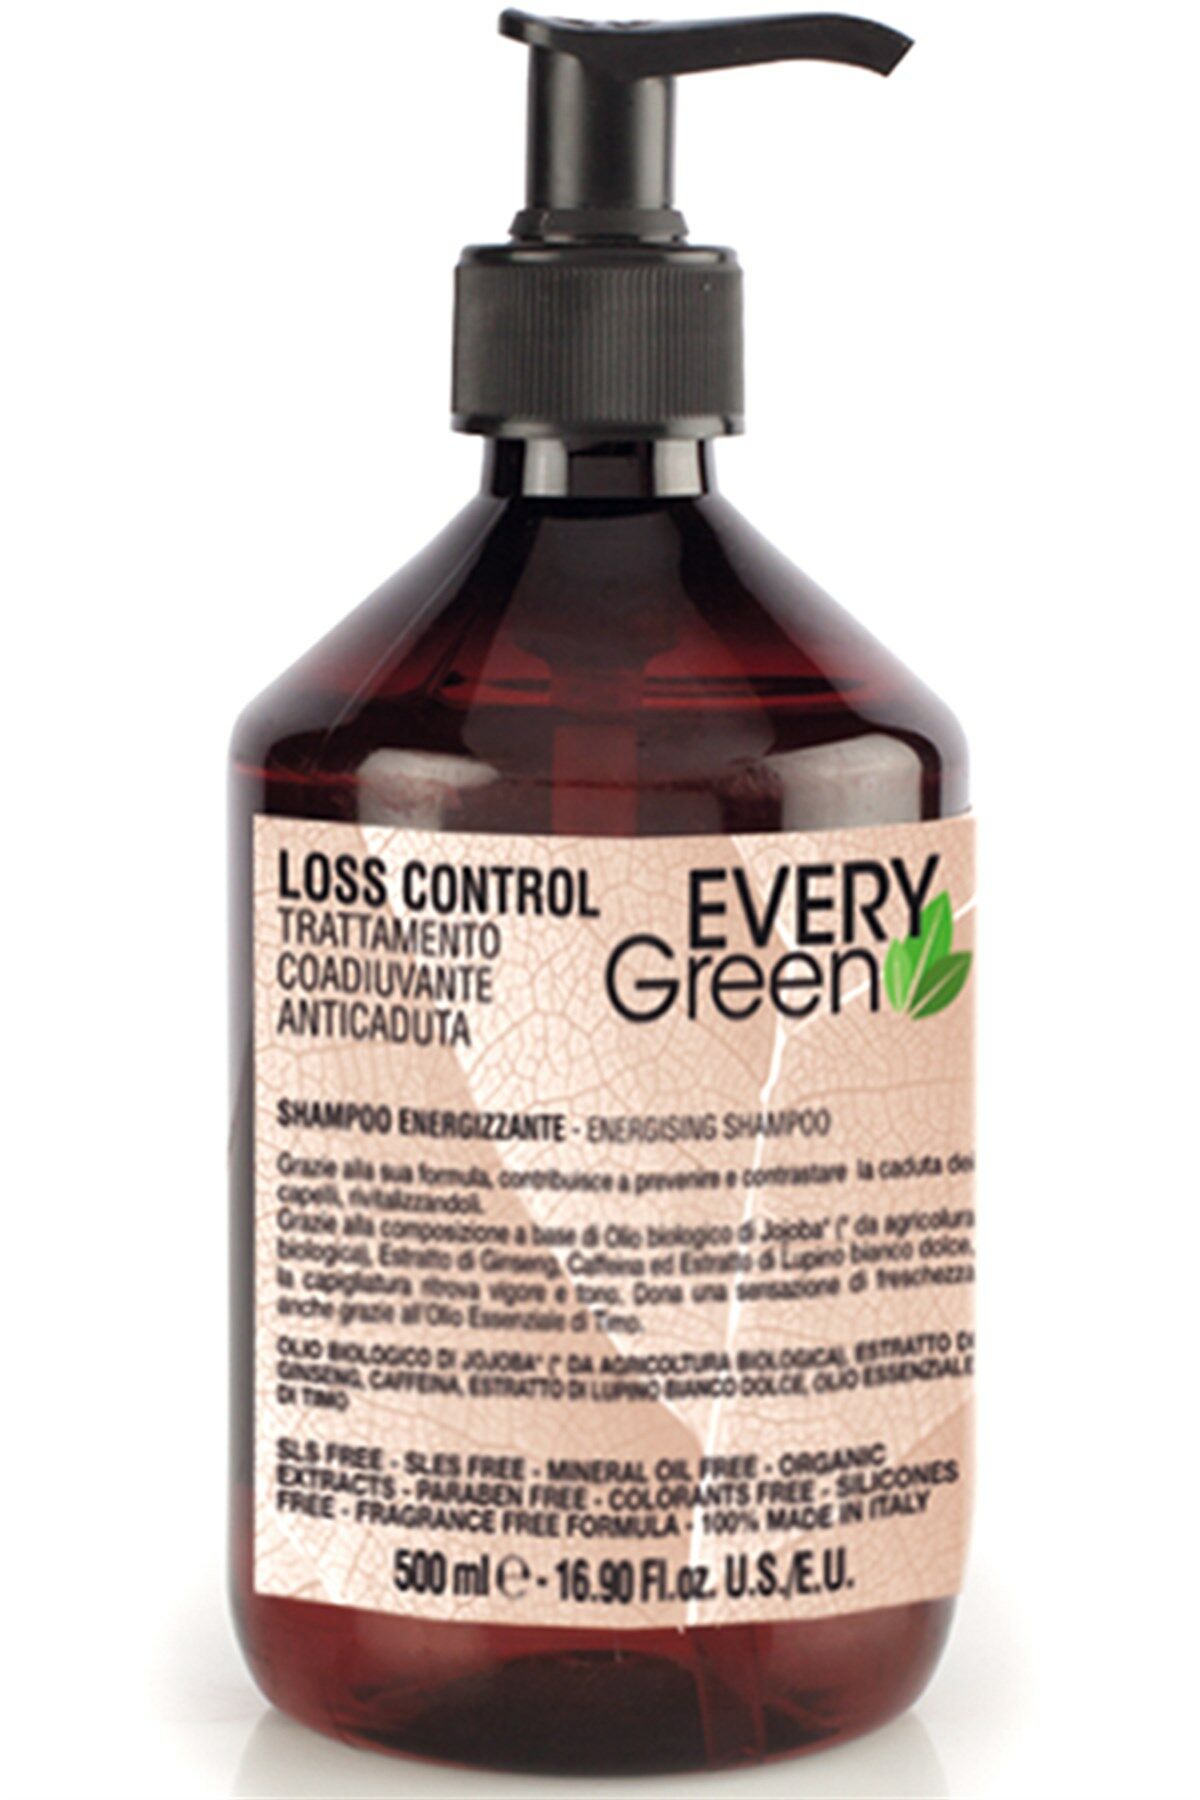 EveryGreen Loss Control Energising Shampoo - Dökülen Saçlara Özel Bakım Şampuanı 500 Ml.